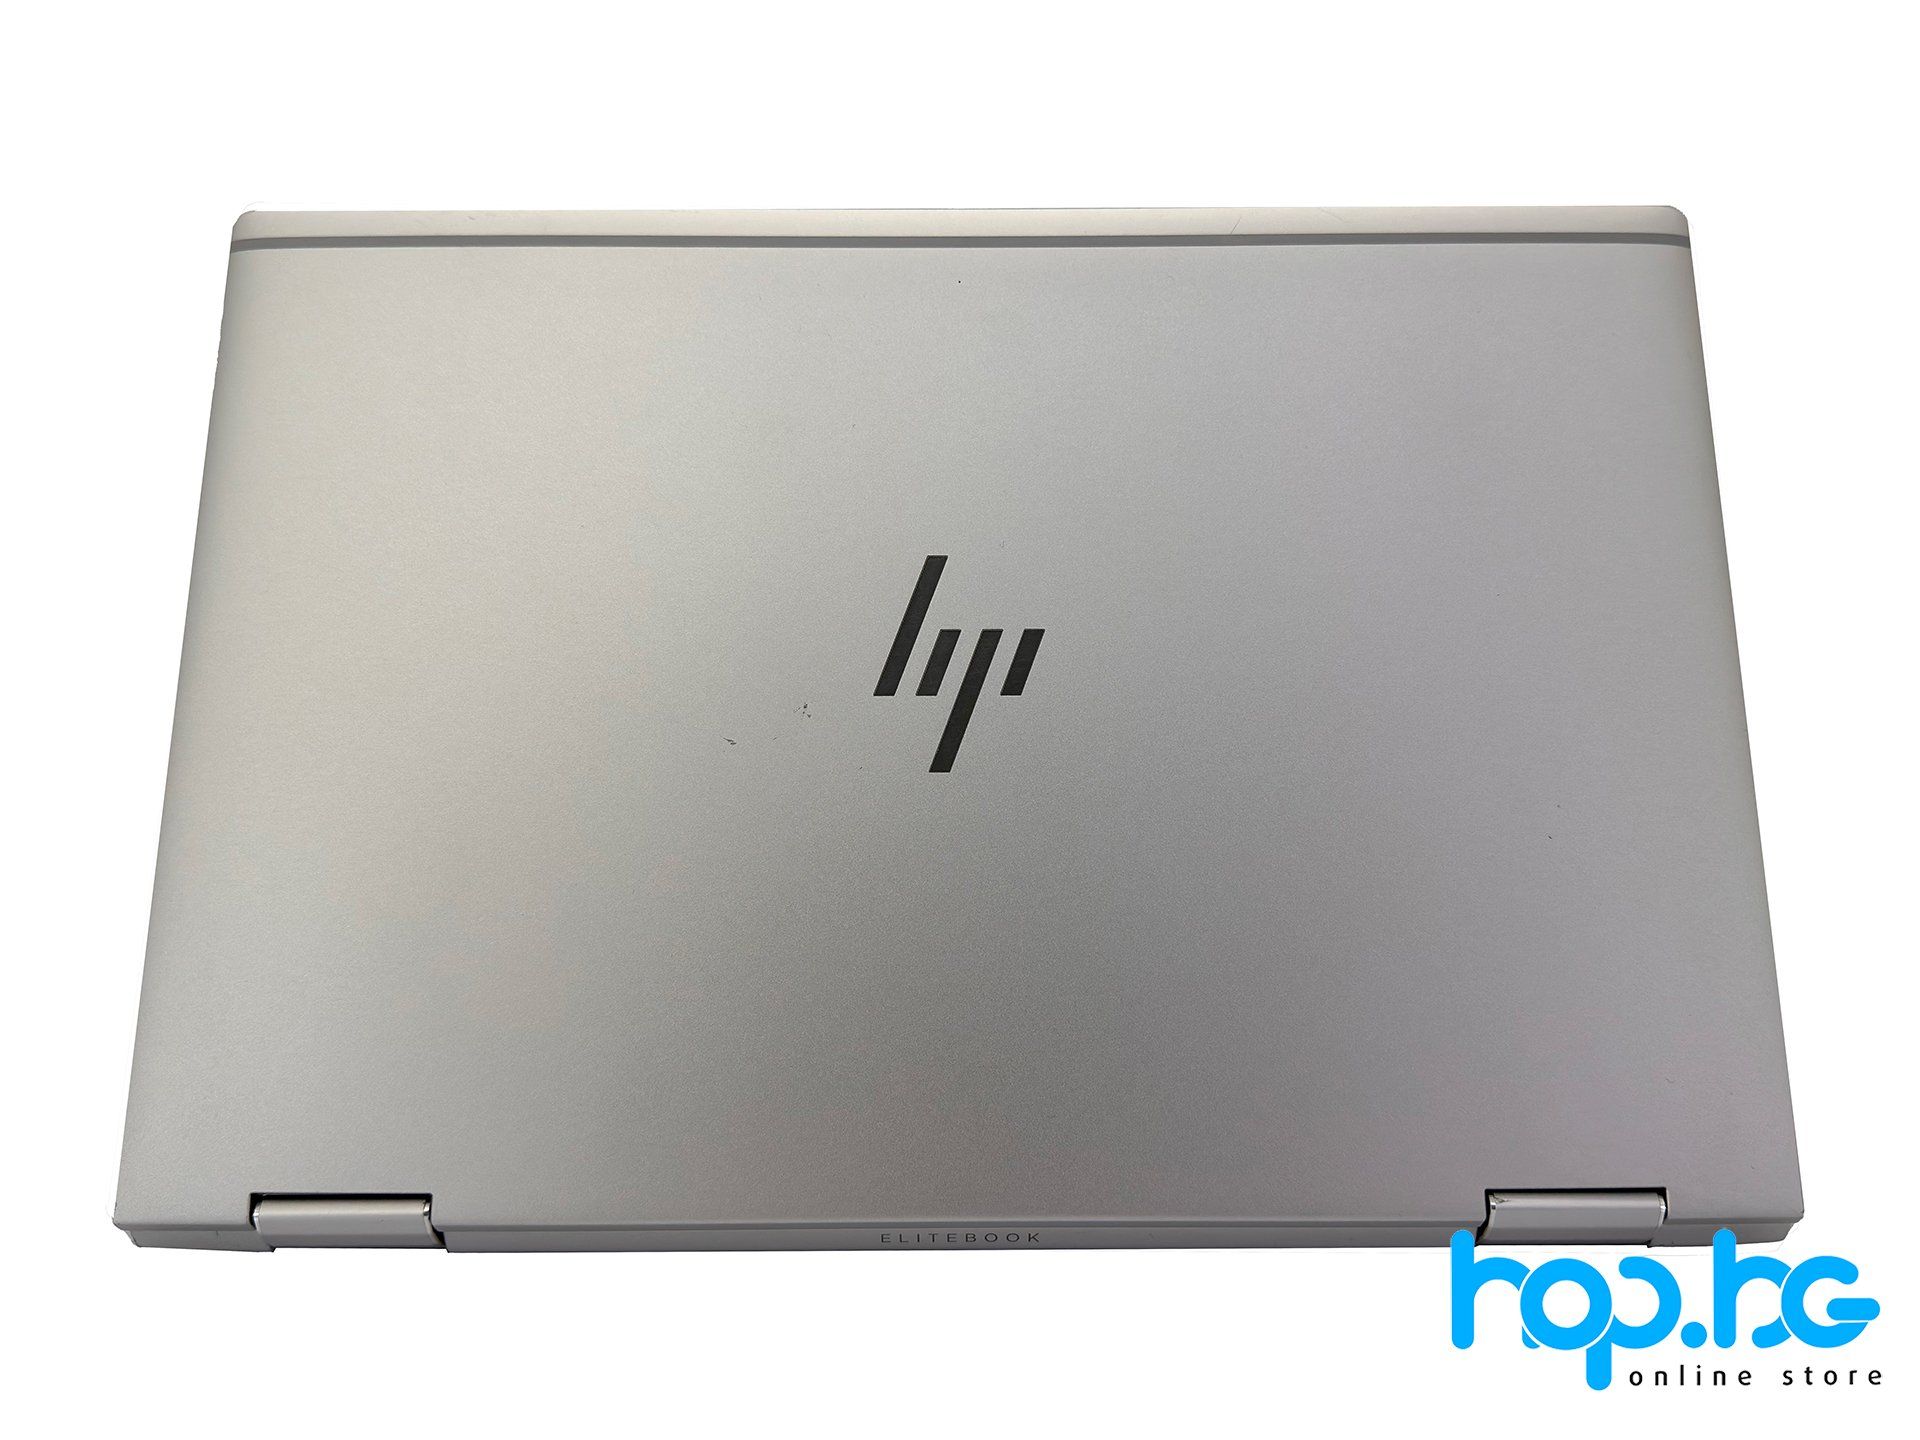 Лаптоп HP EliteBook x360 1030 G3 ( 6150152 )